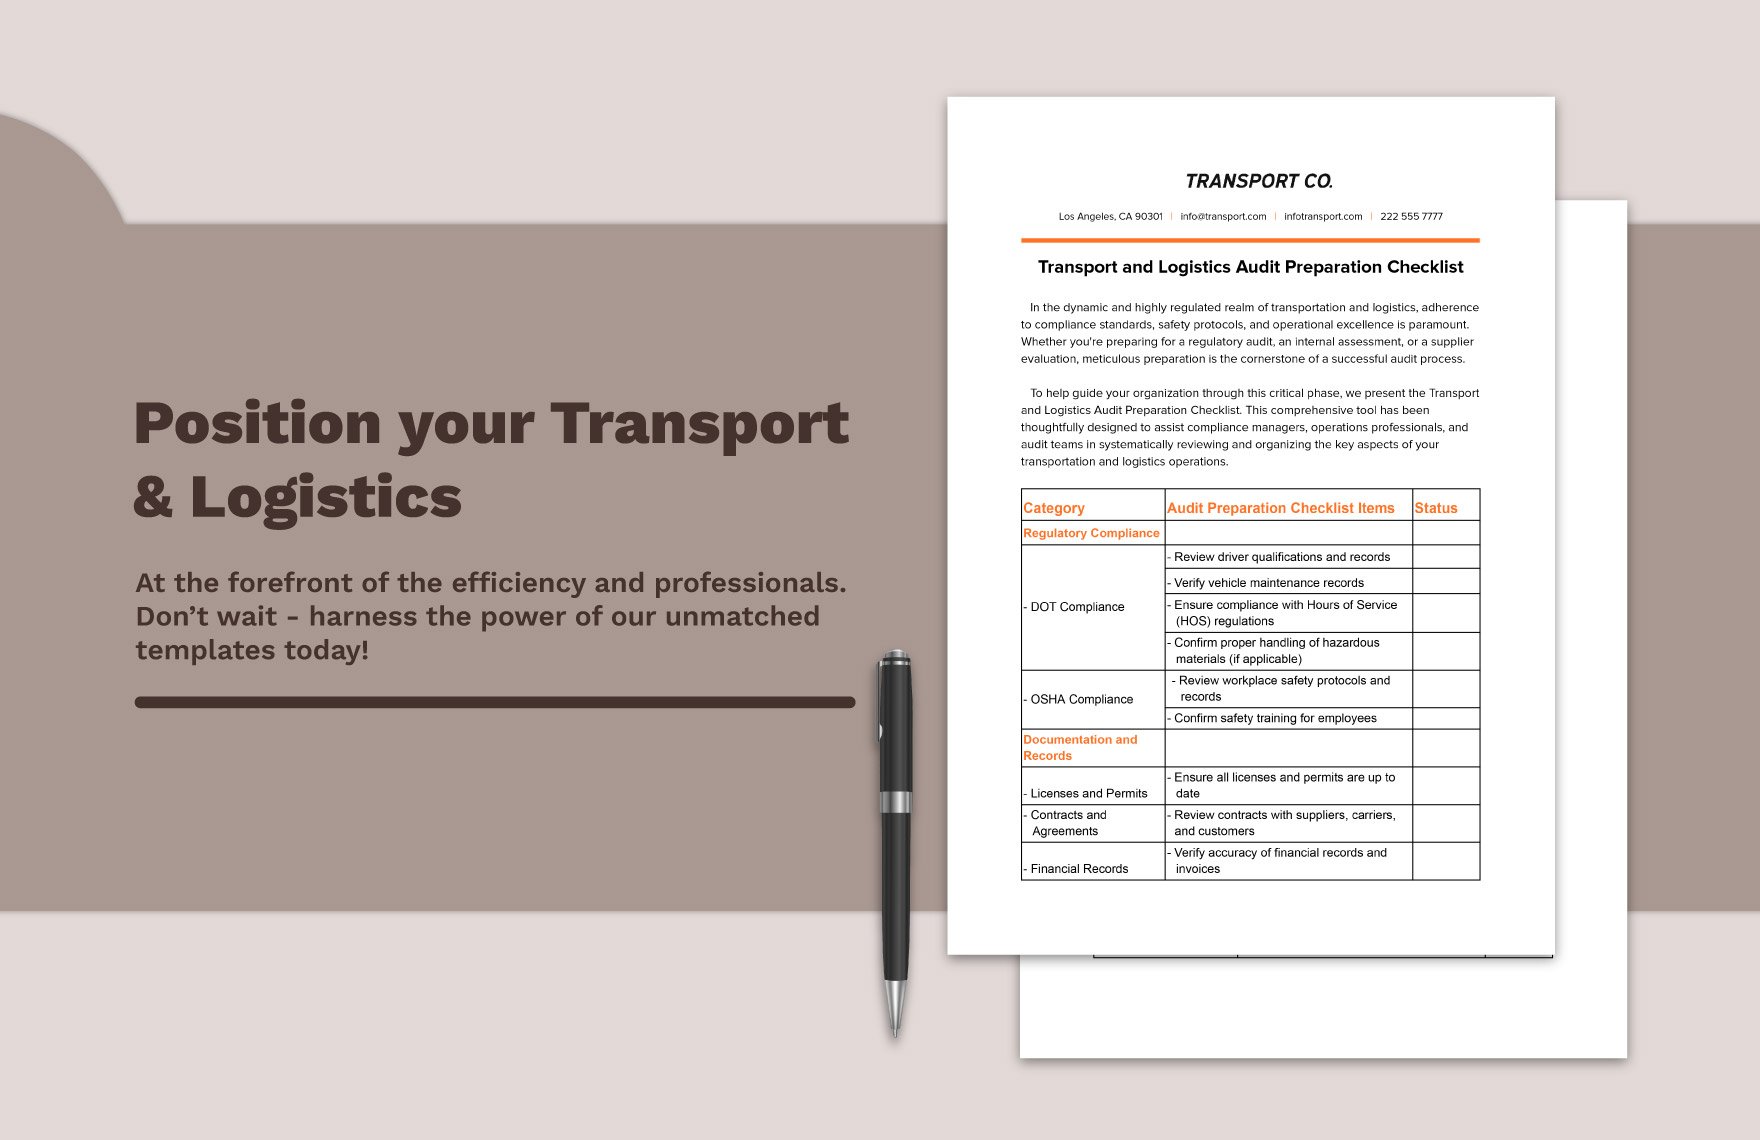 Transport and Logistics Audit Preparation Checklist Template